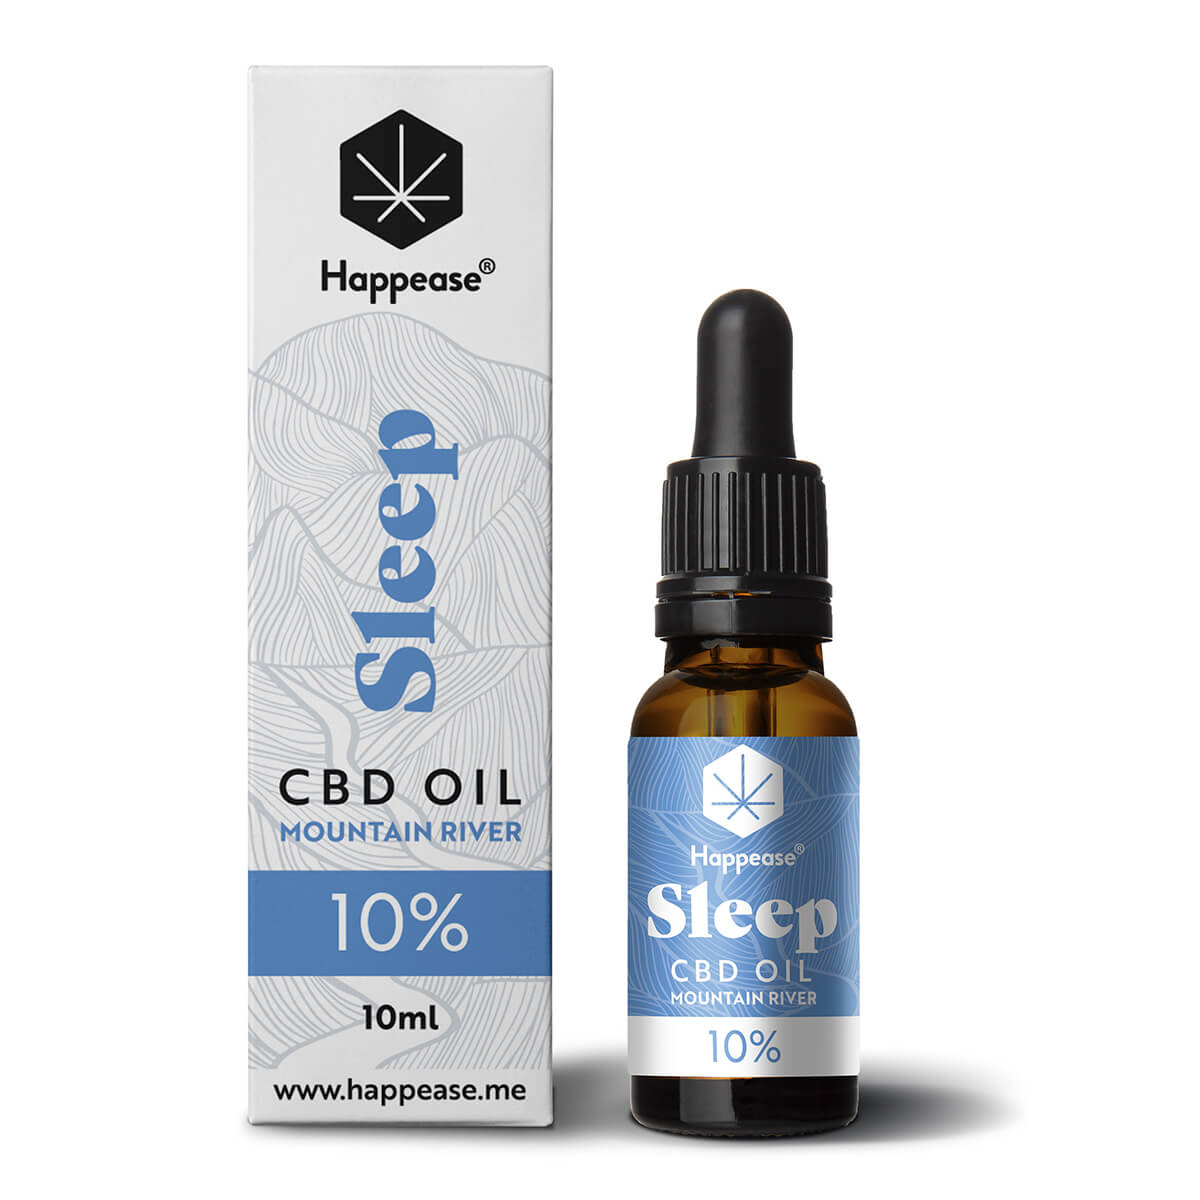 Sleep | 10% CBD Oil | Mountain River